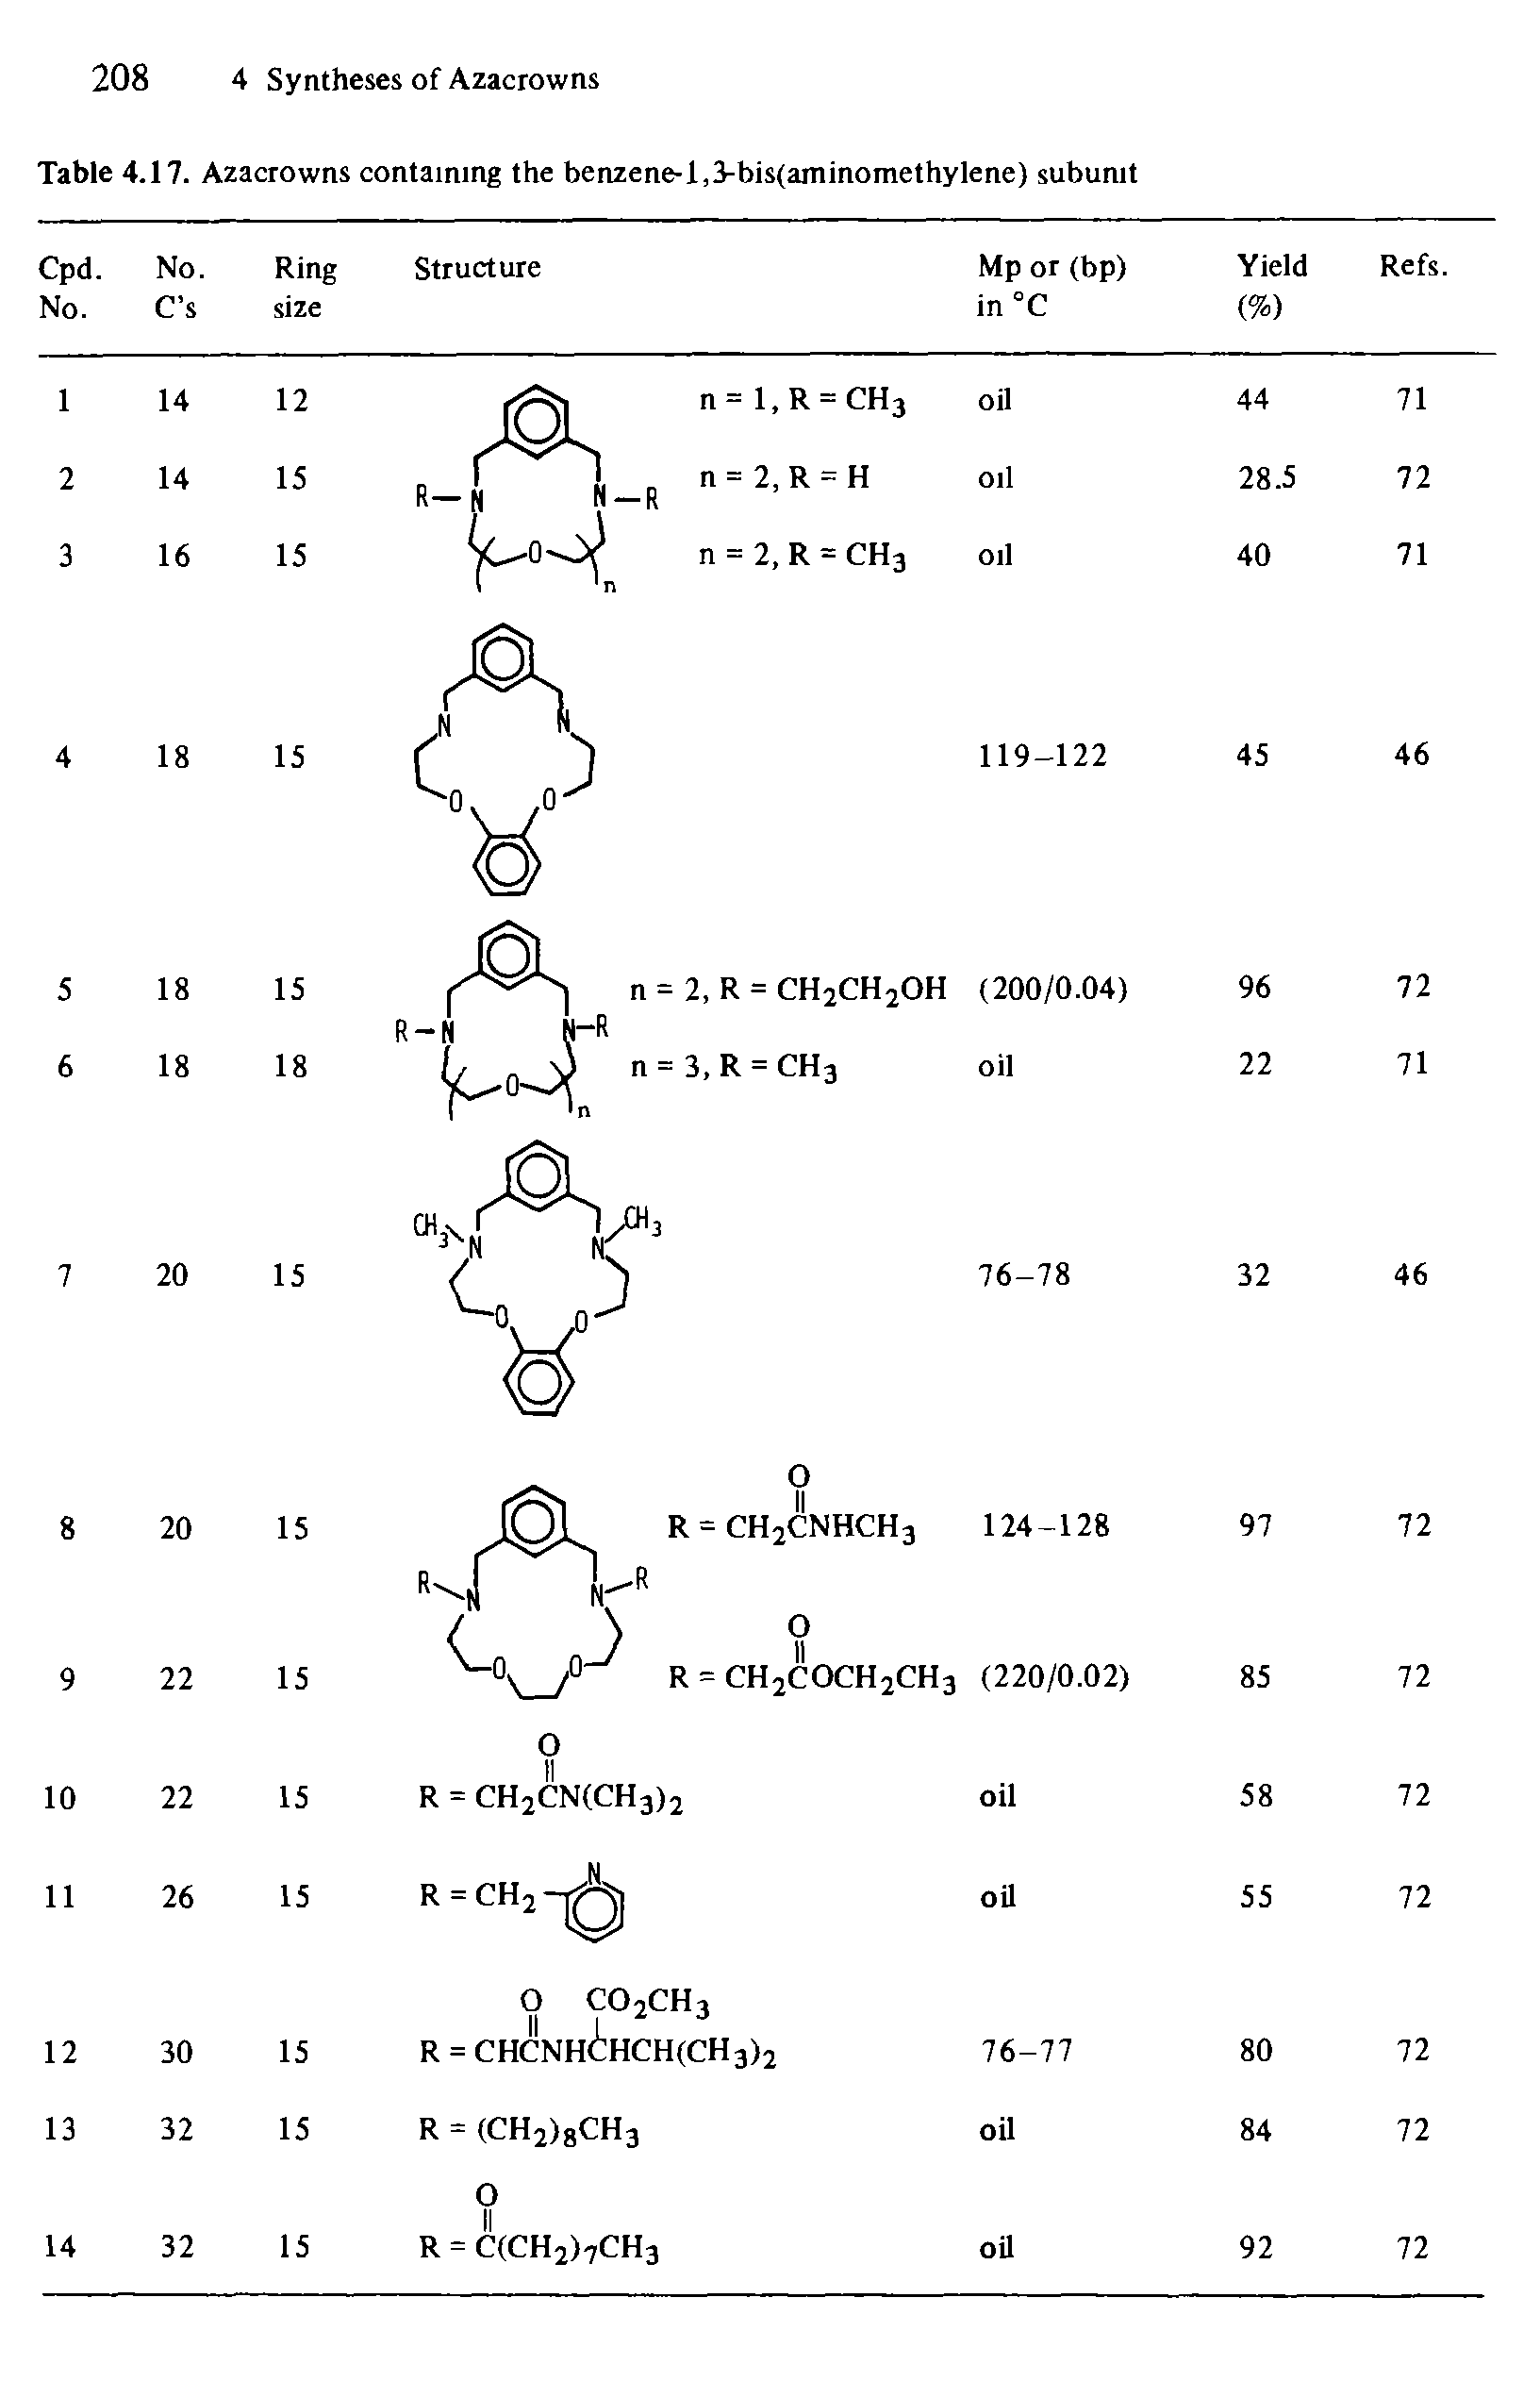 Table 4.17. Azacrowns containing the benzene-1,3-bis(aminomethylene) subunit...